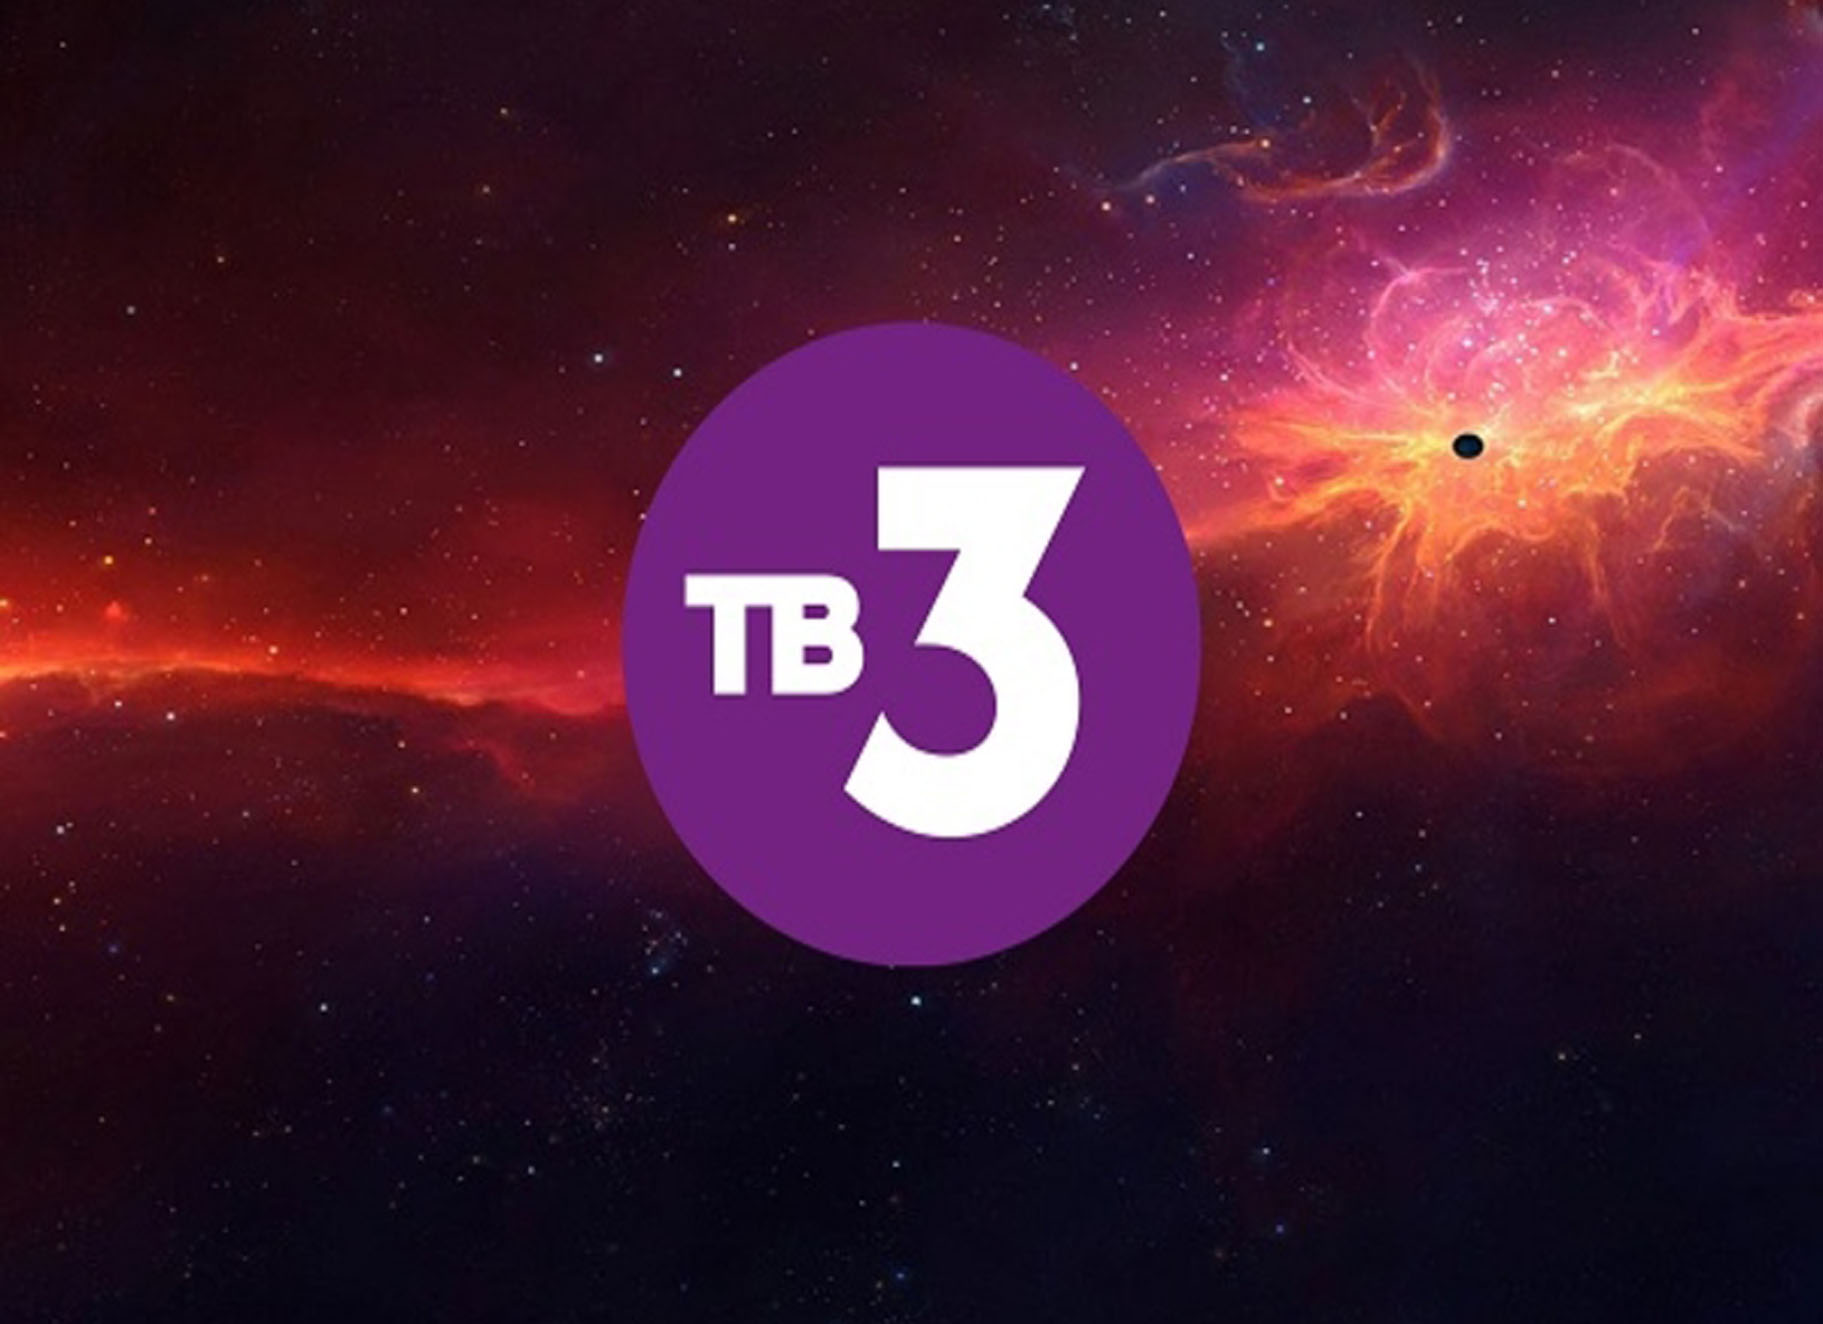 Tv3 3. Канал тв3. Тв3 логотип. Логотип канала тв3. ТВ 3 эмблема.